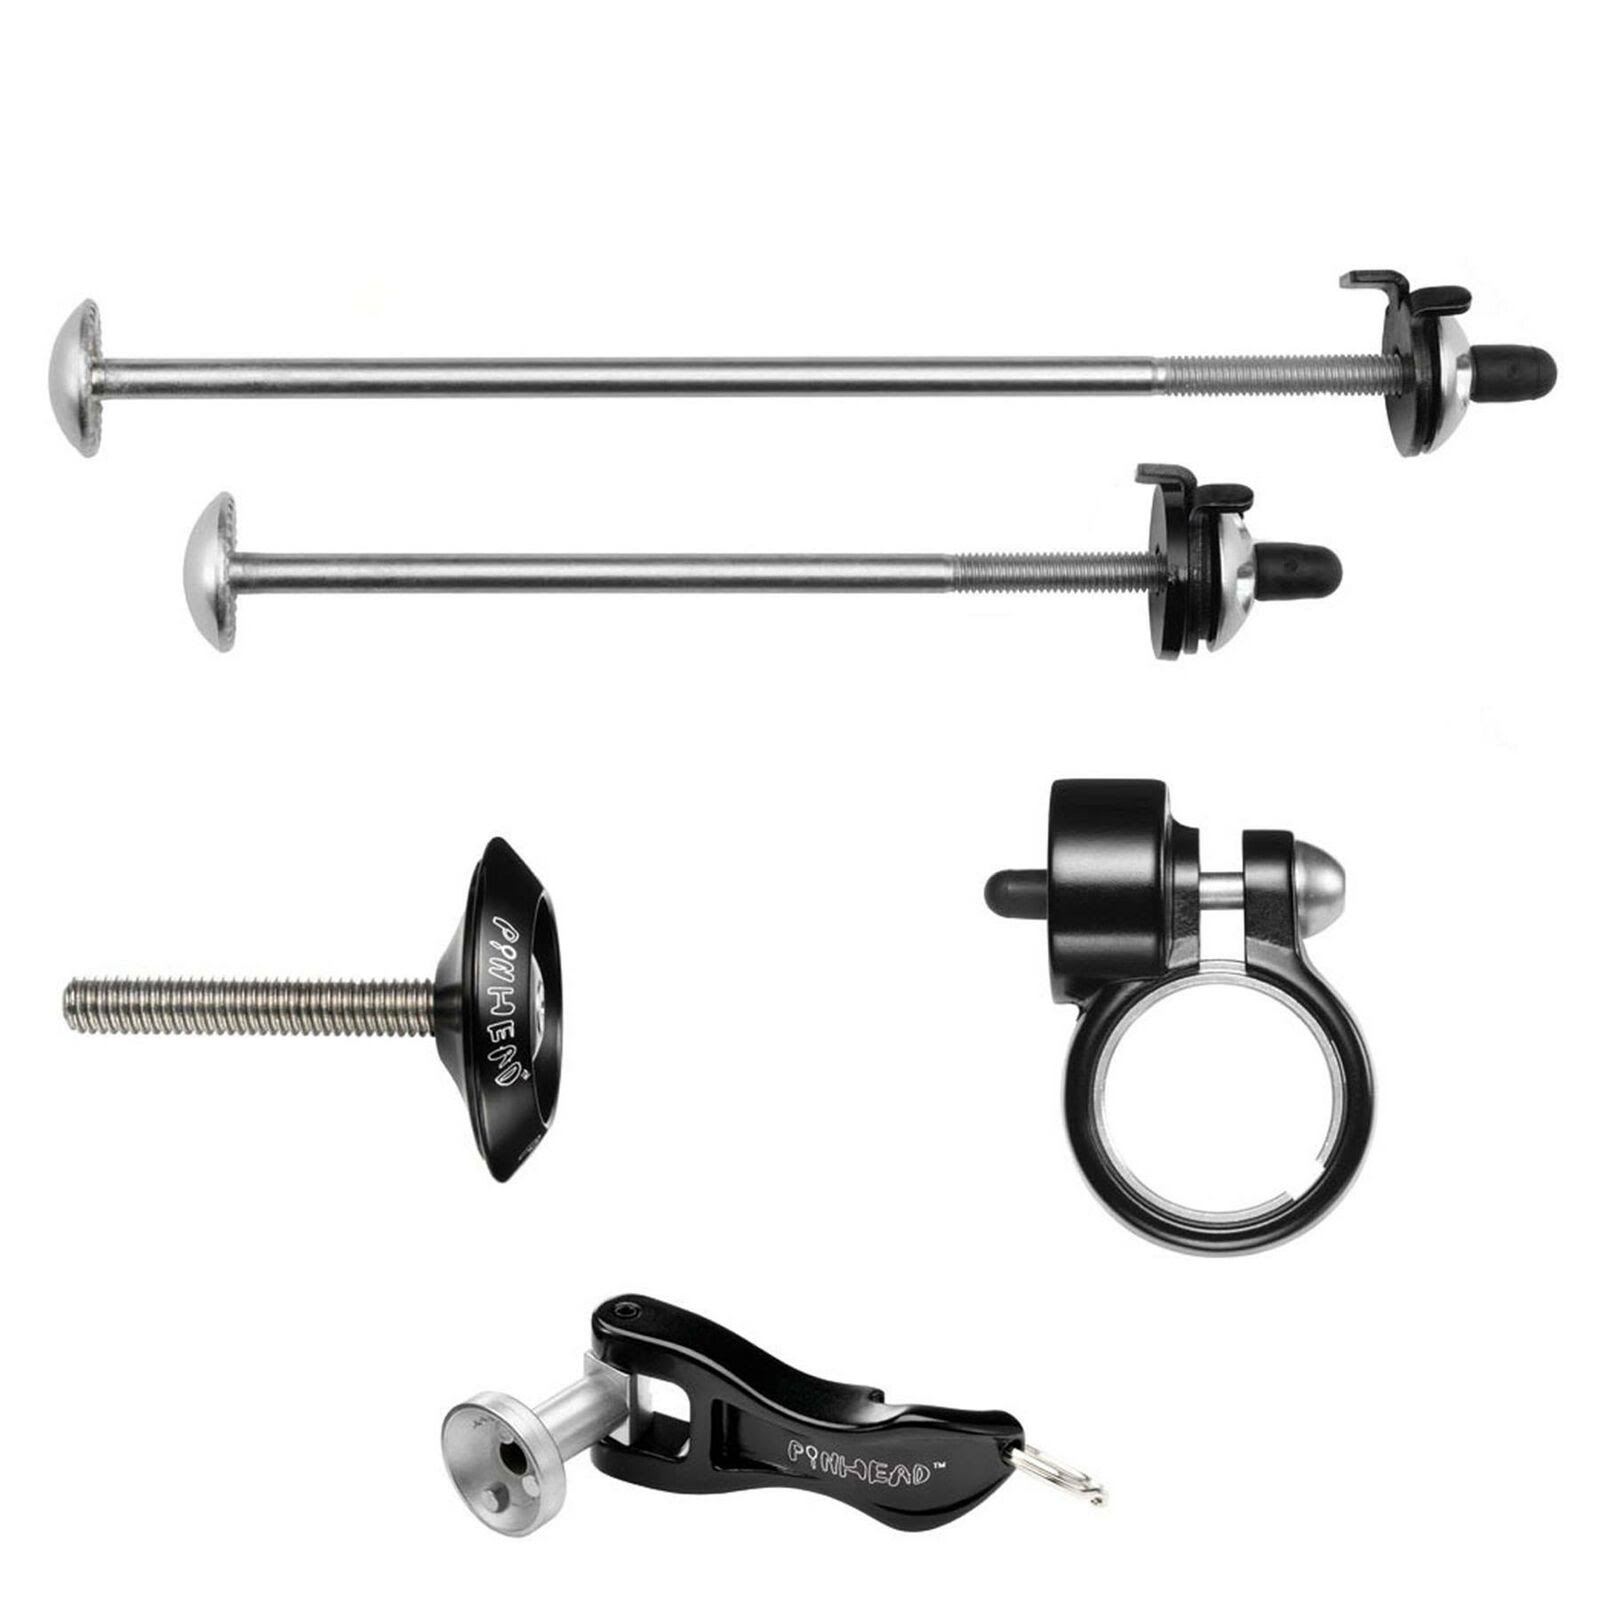 Pinhead Bicycle Locking Skewer Wheels and Accessories Set - 4pc